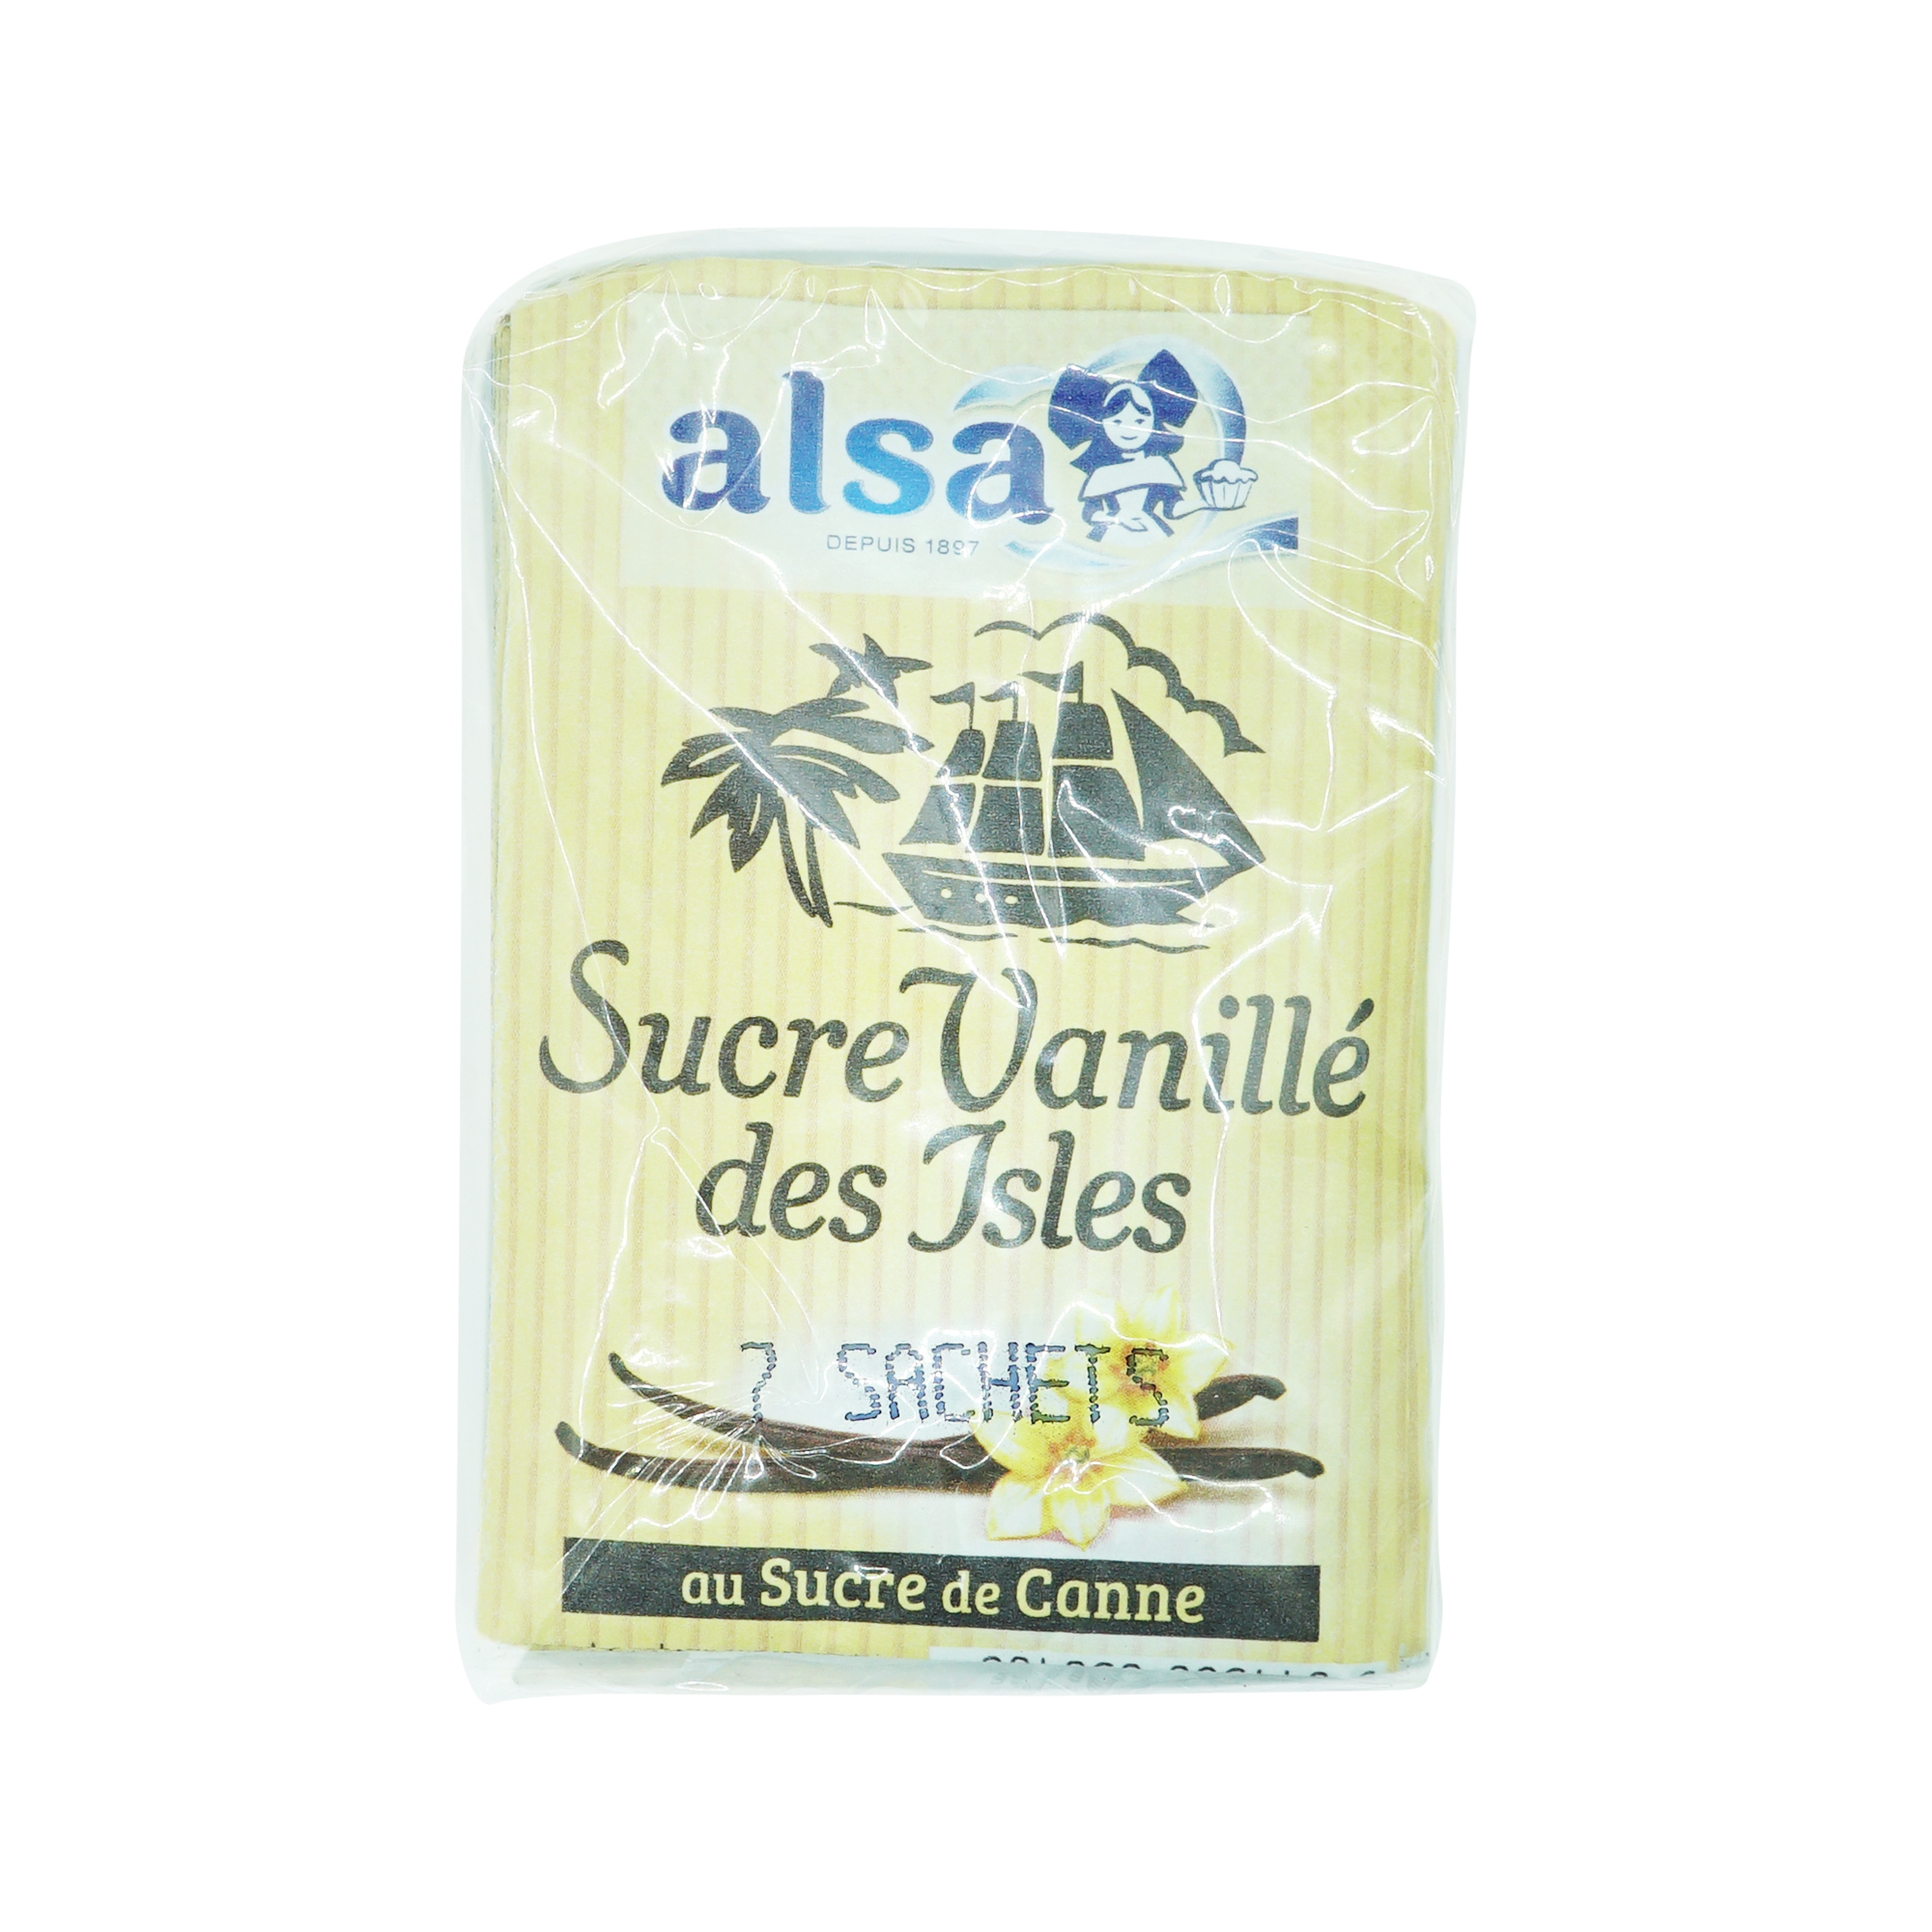 Alsa Vanilla Sugar from Islands (7x7.5g)